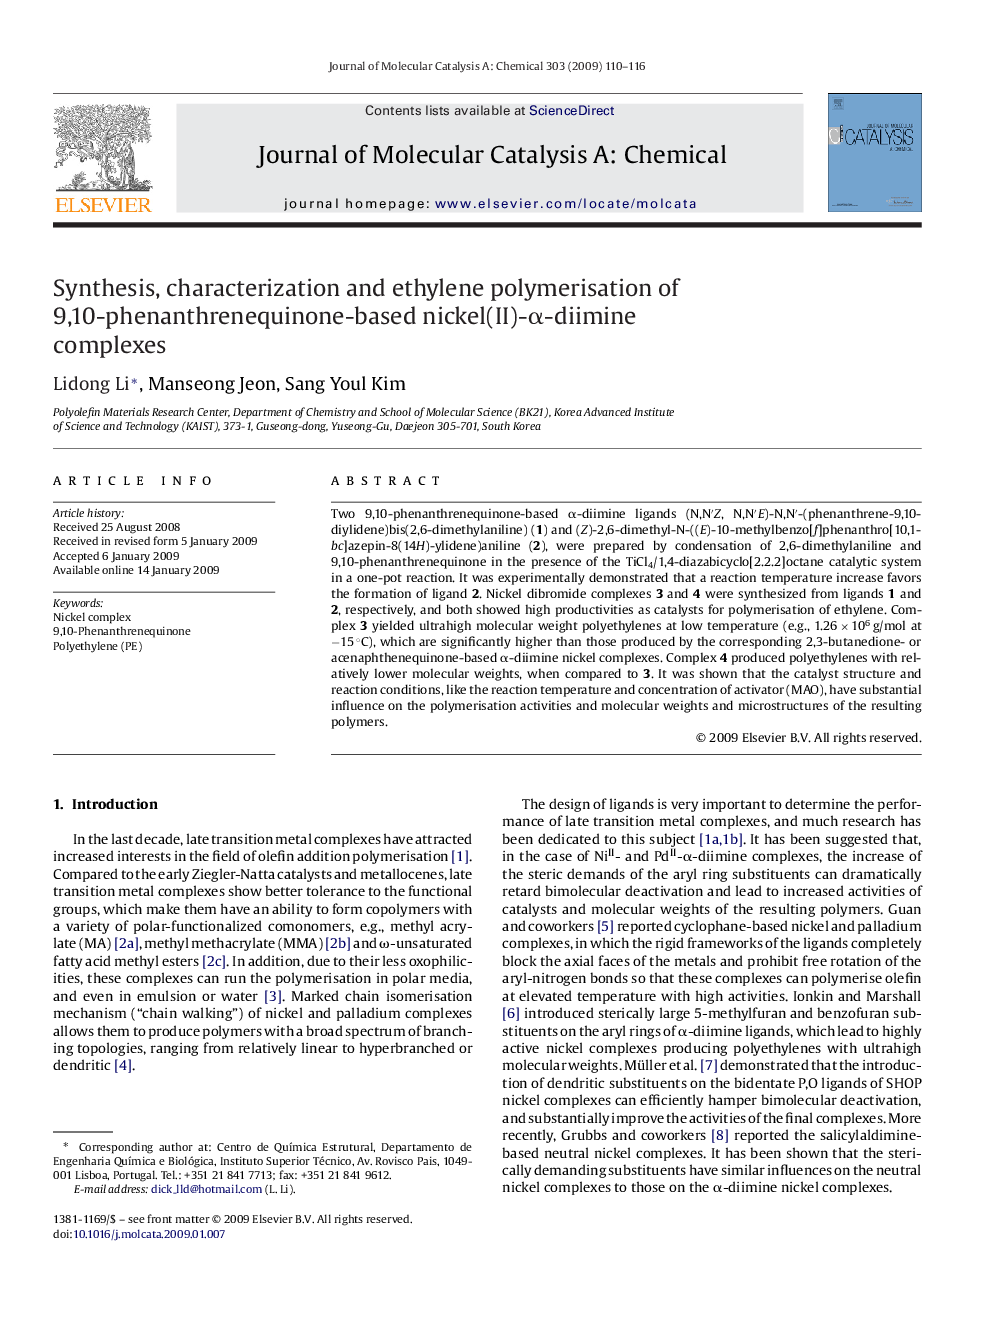 Synthesis, characterization and ethylene polymerisation of 9,10-phenanthrenequinone-based nickel(II)-α-diimine complexes